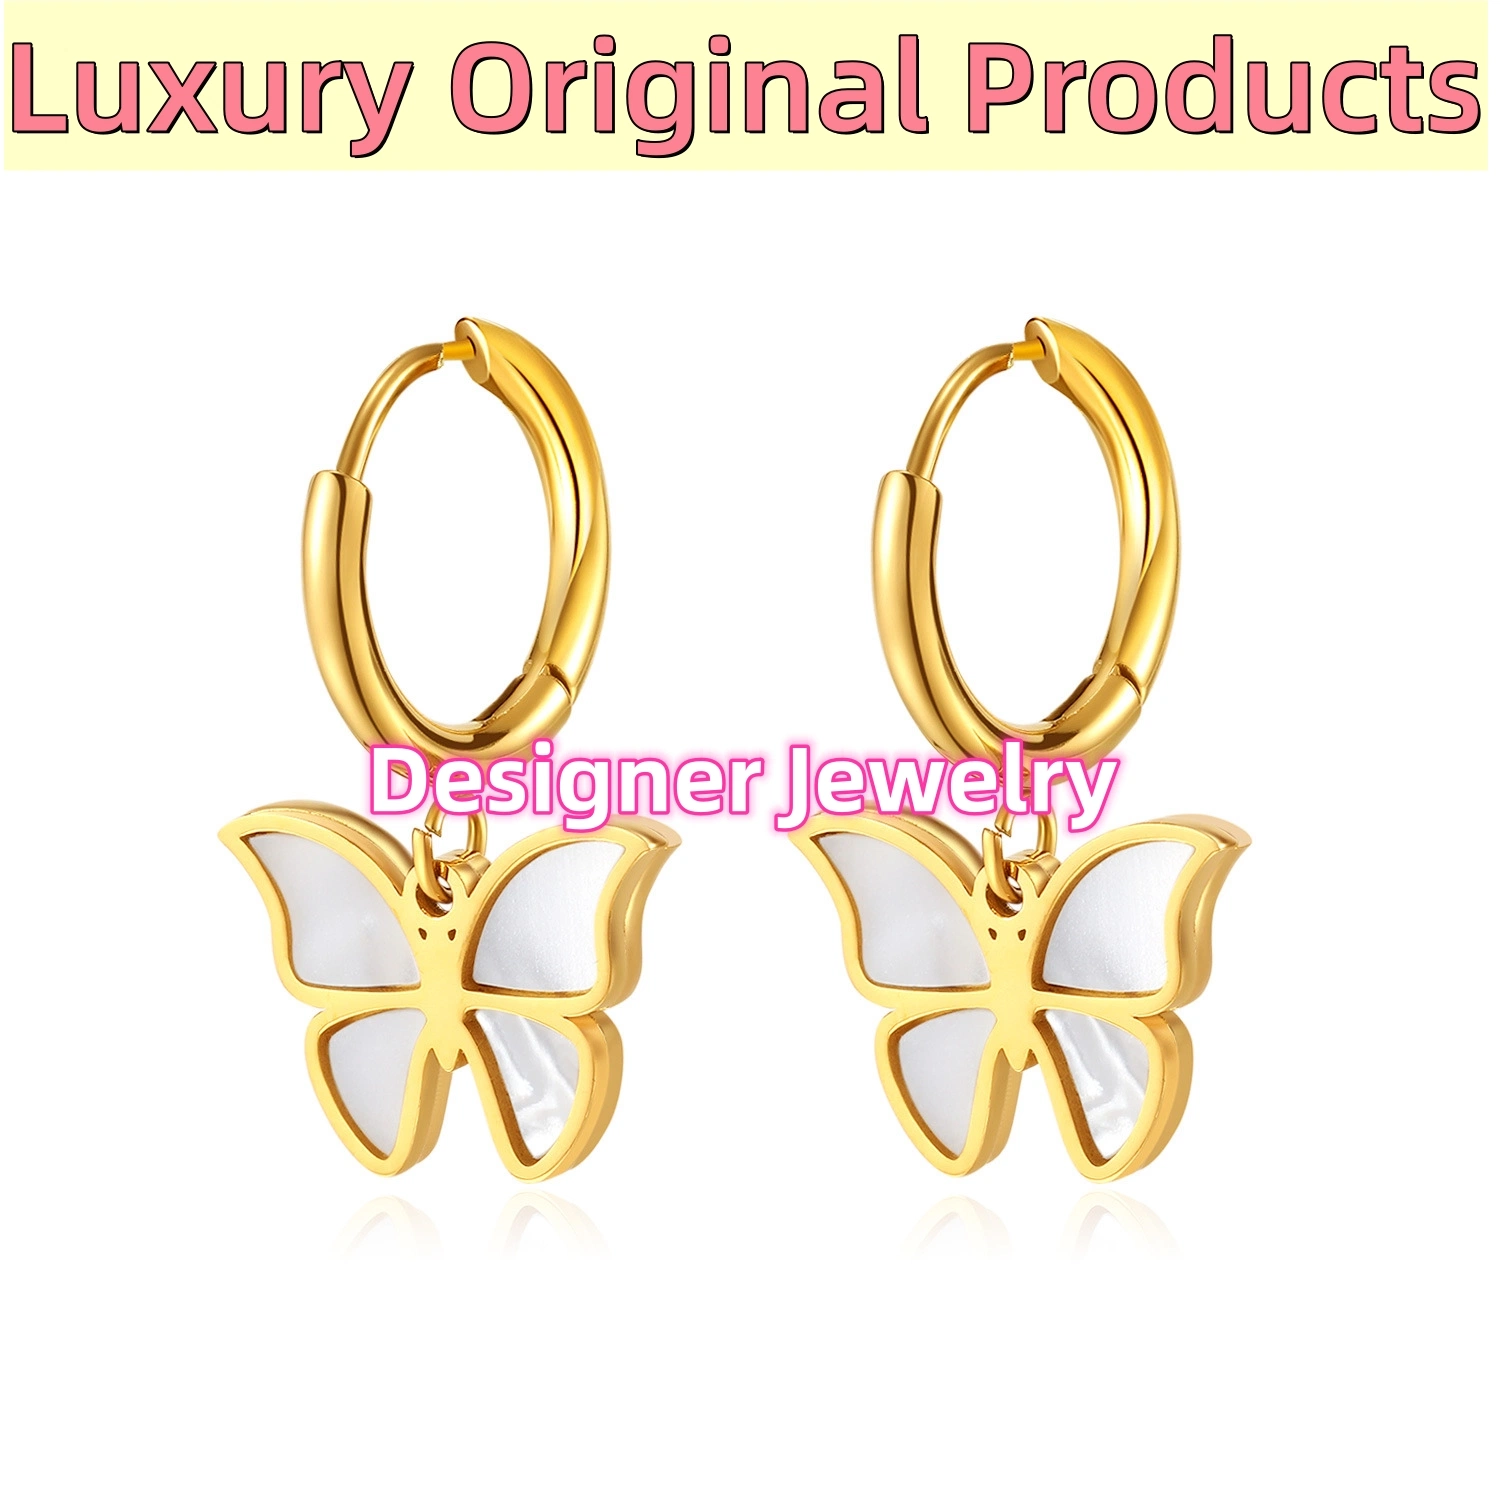 Fashion Jewelry Gold Hoop Earrings Gold Twisted Huggie Hoops Earrings Designer Jewellery Girls Gift